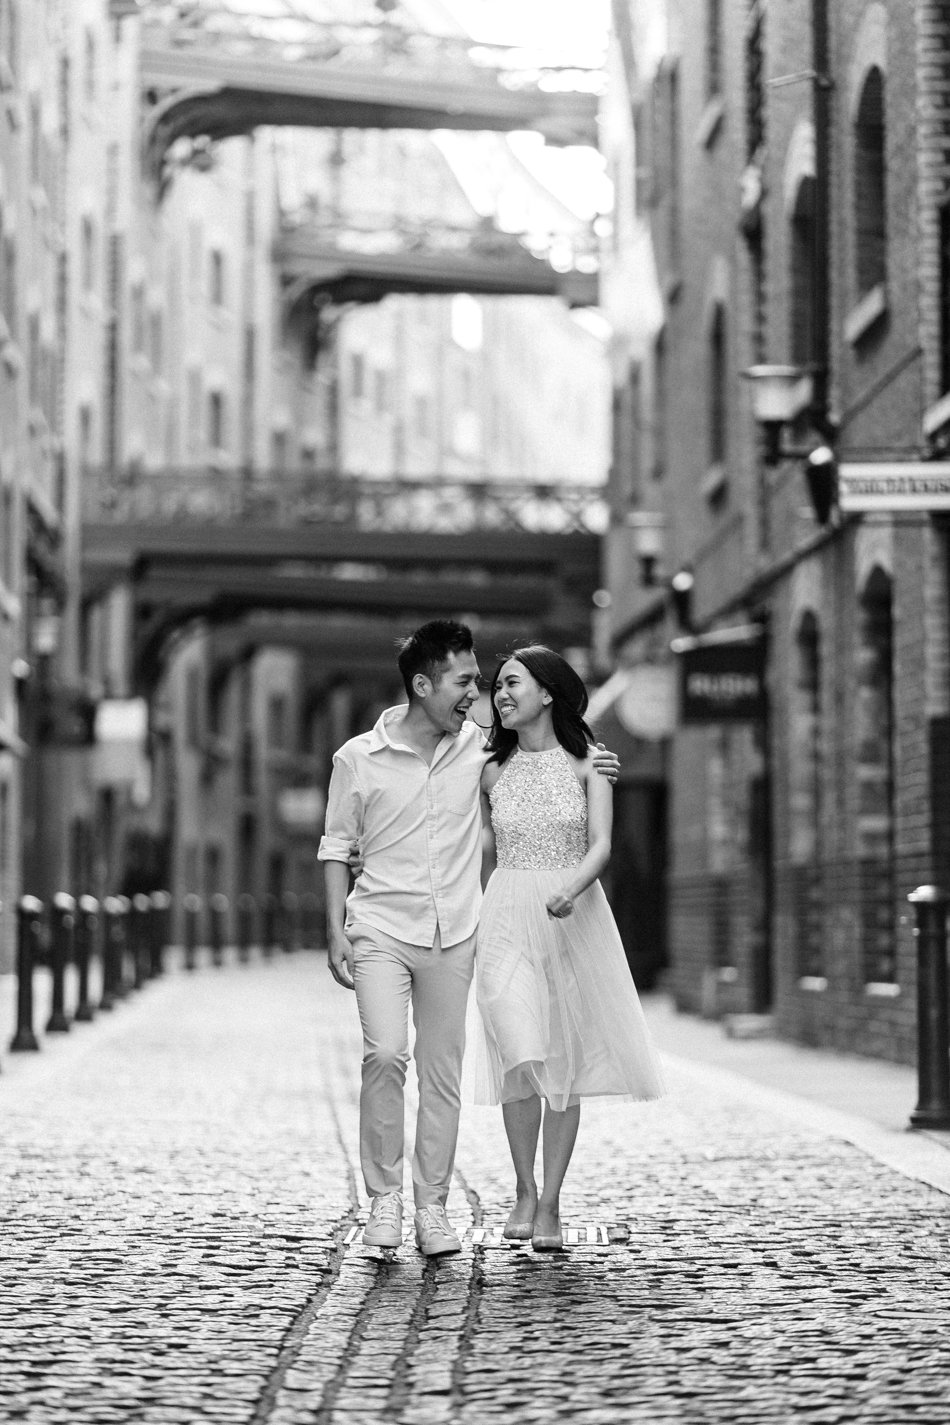  London Couple Photographer - Couples Photoshoot around Big Ben and Tower Bridge 